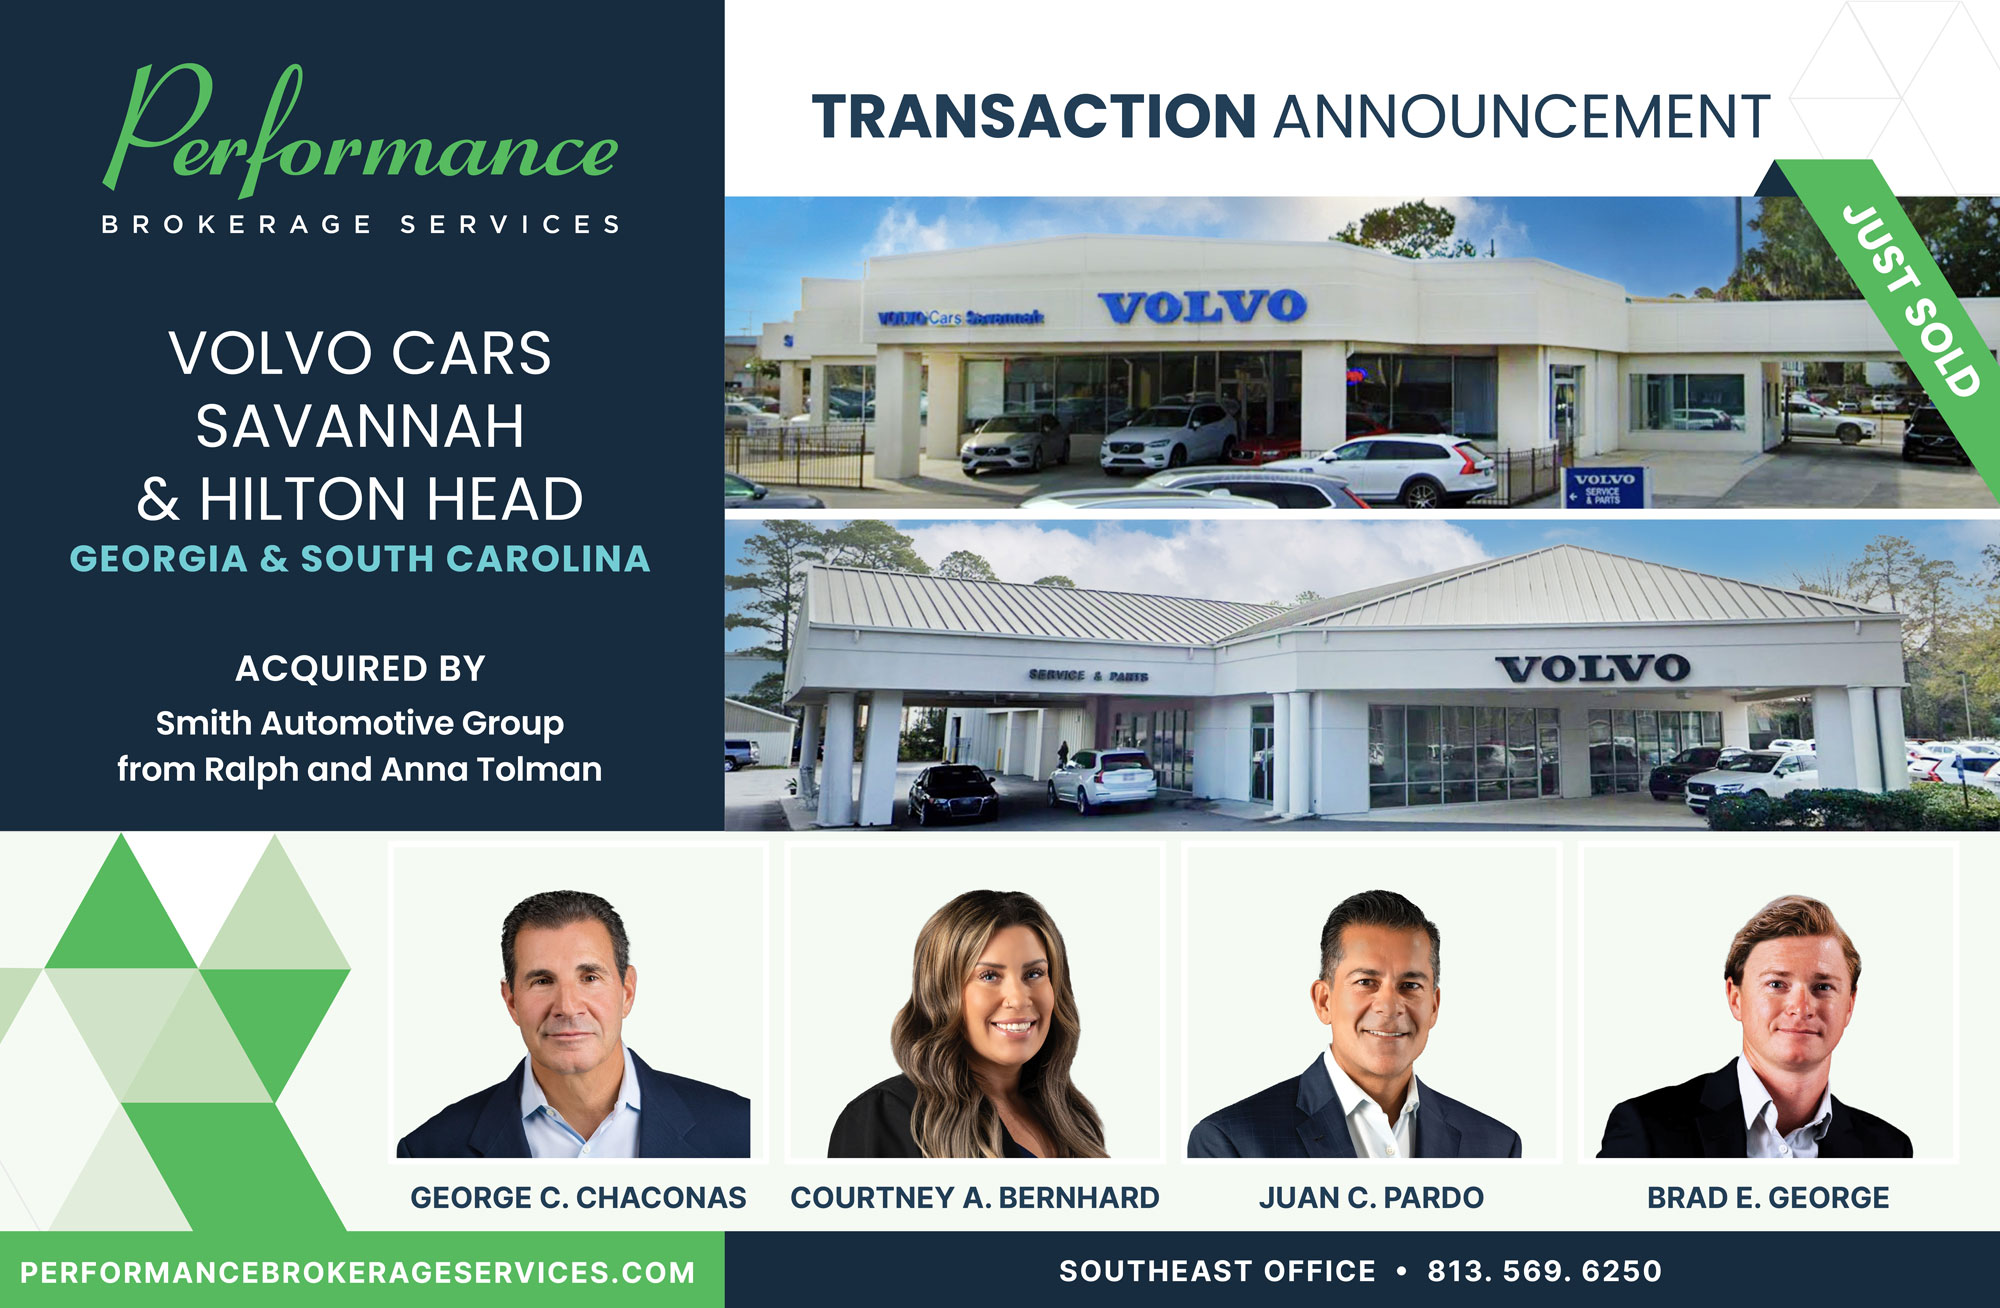 Volvo Cars Savannah & Hilton Head sells to Fields Automotive Group with Performance Brokerage